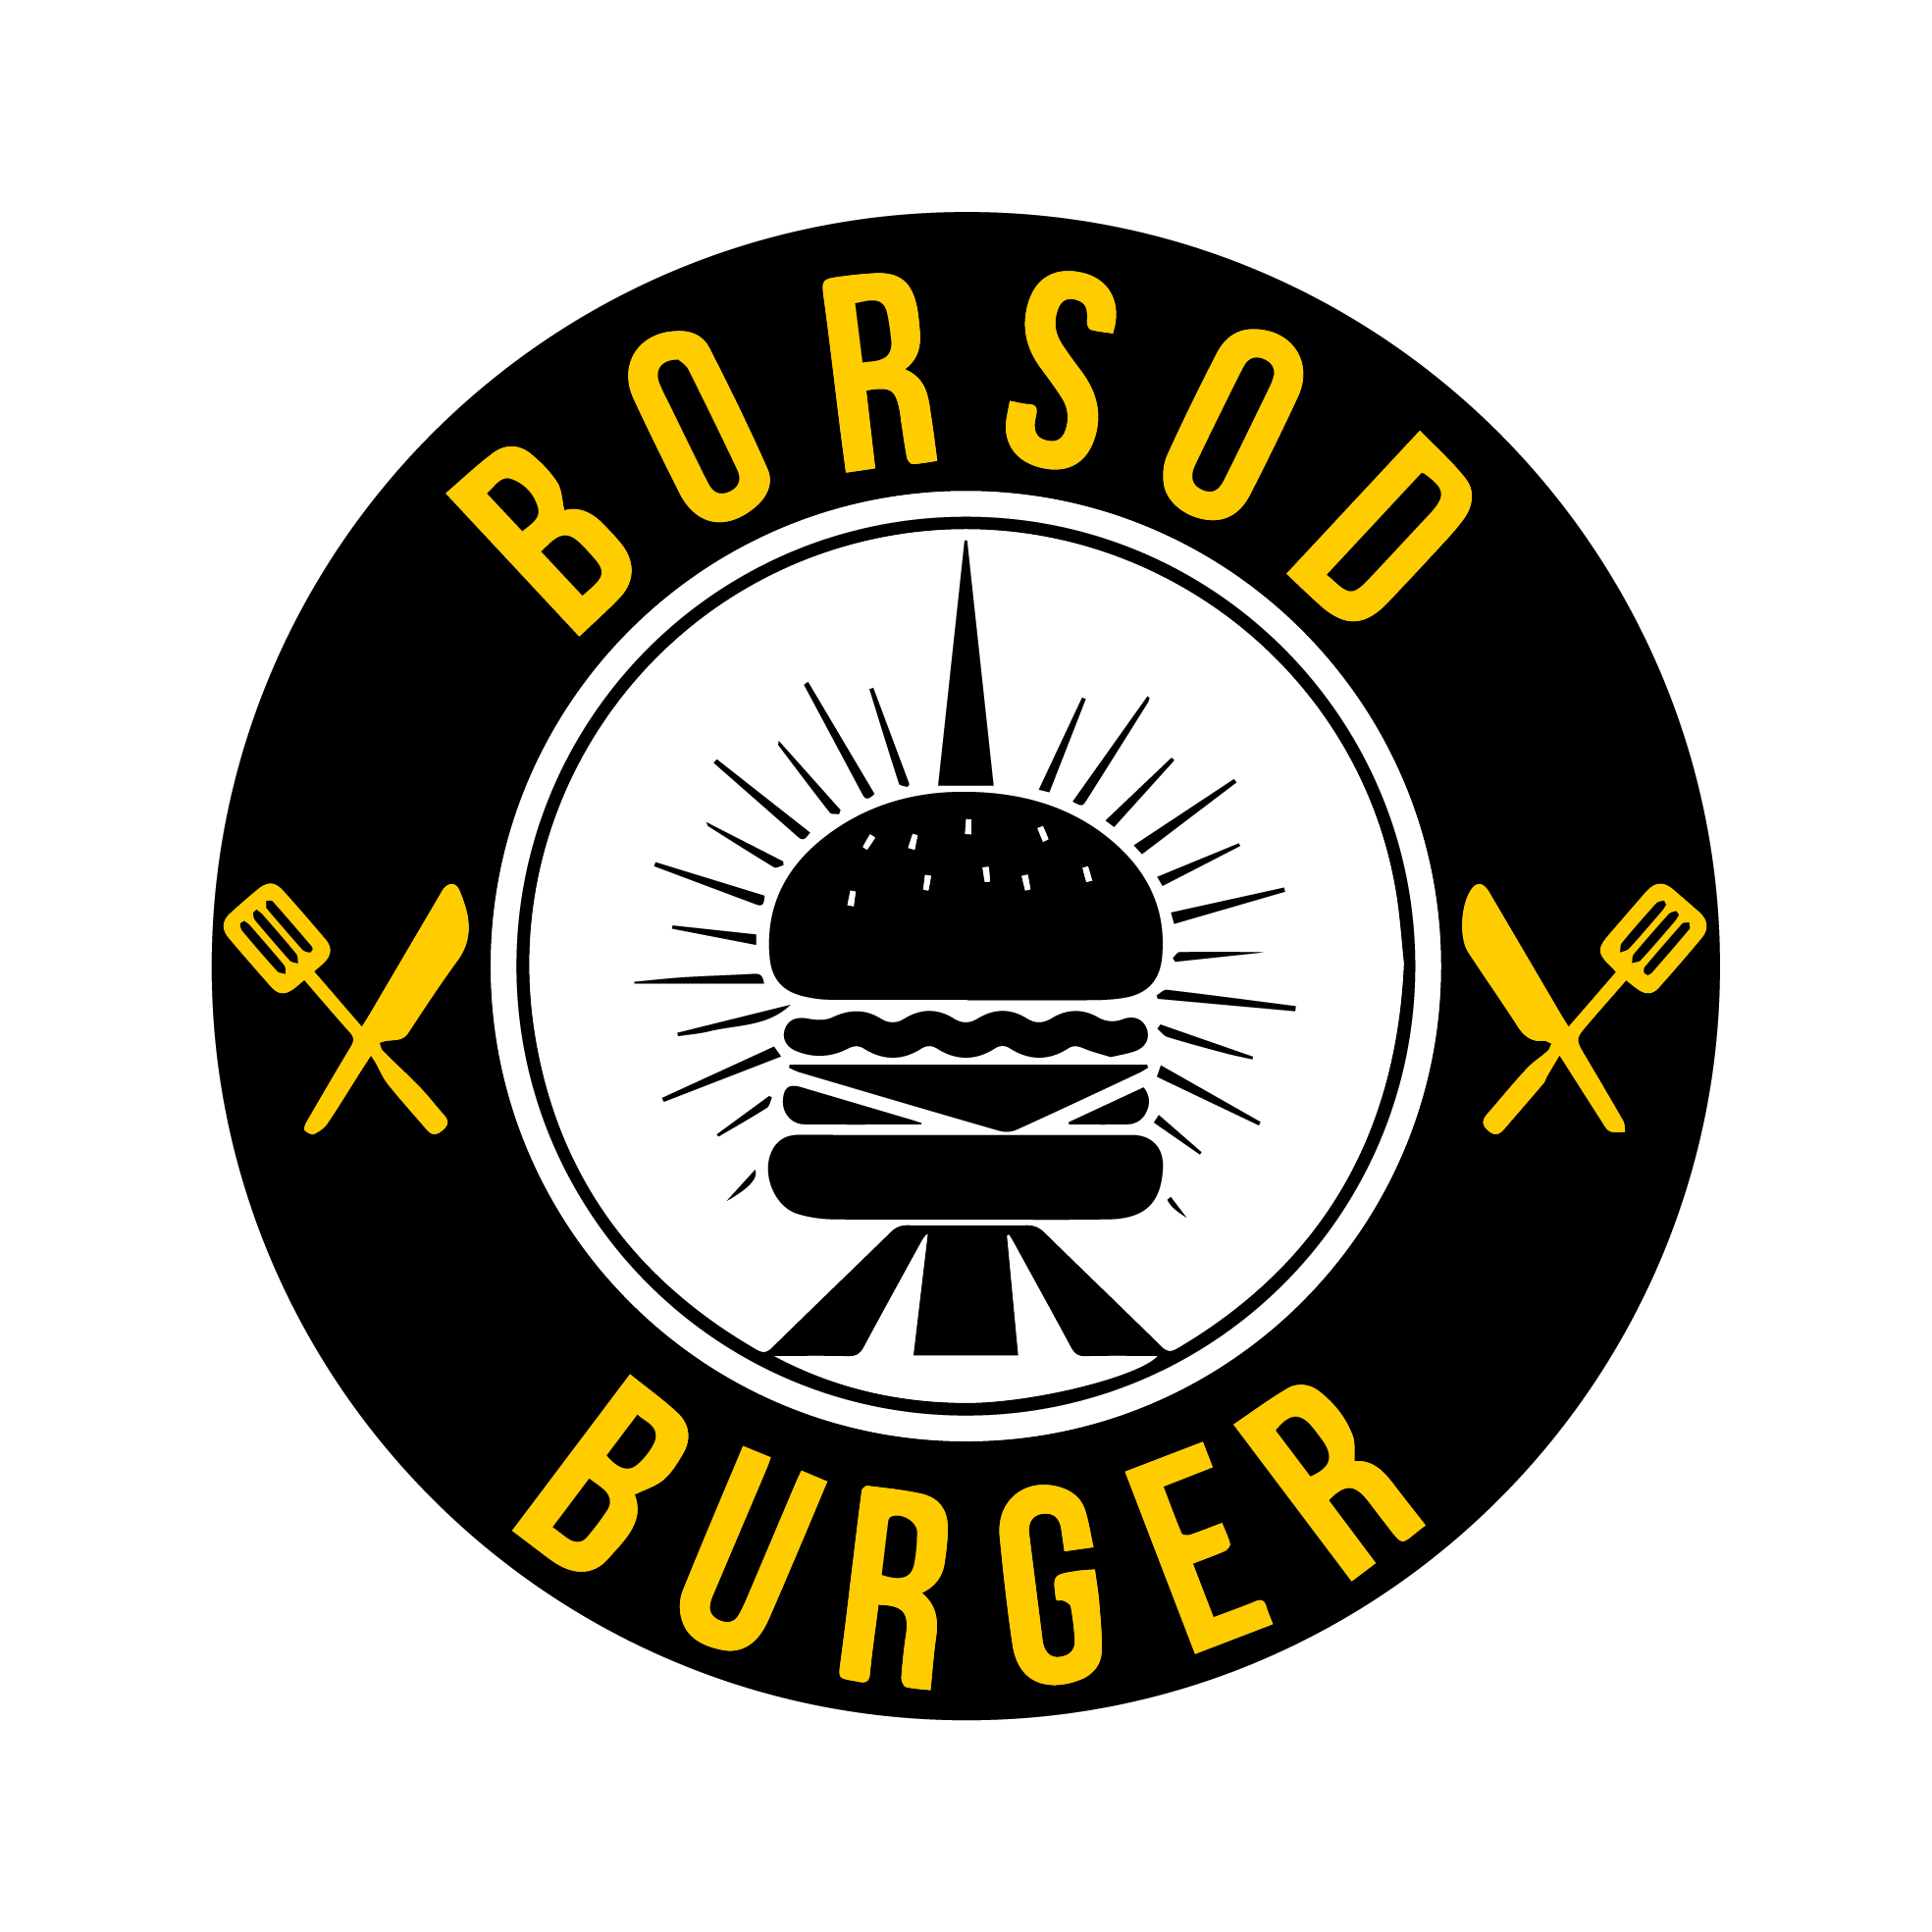 Borsod Burger